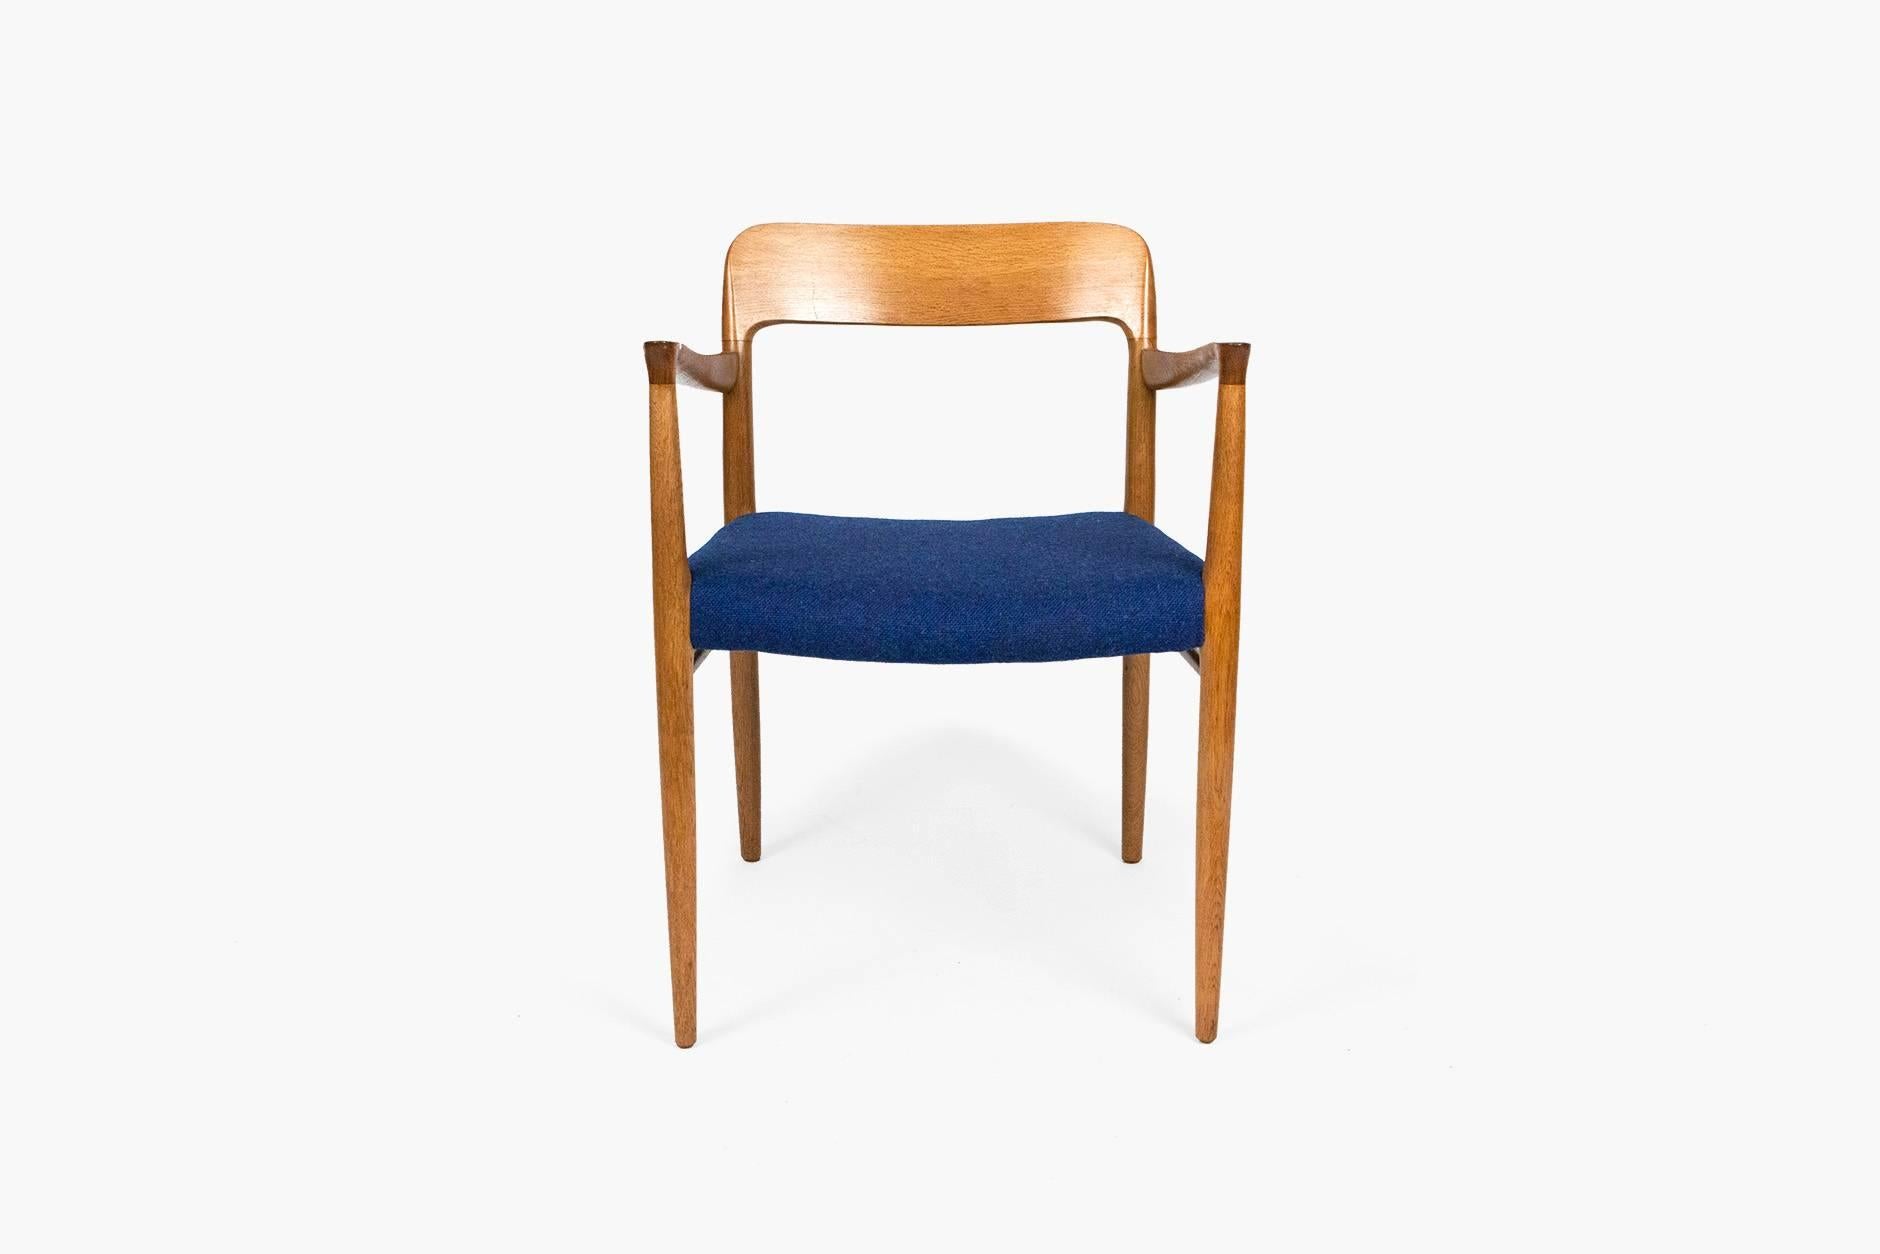 Model #56 armchair in solid oak designed by Niels Moller in 1954 for JL Moller Mobelfabrik, Denmark, 1954. Seat reupholstered in blue tweed wool fabric from Bute.